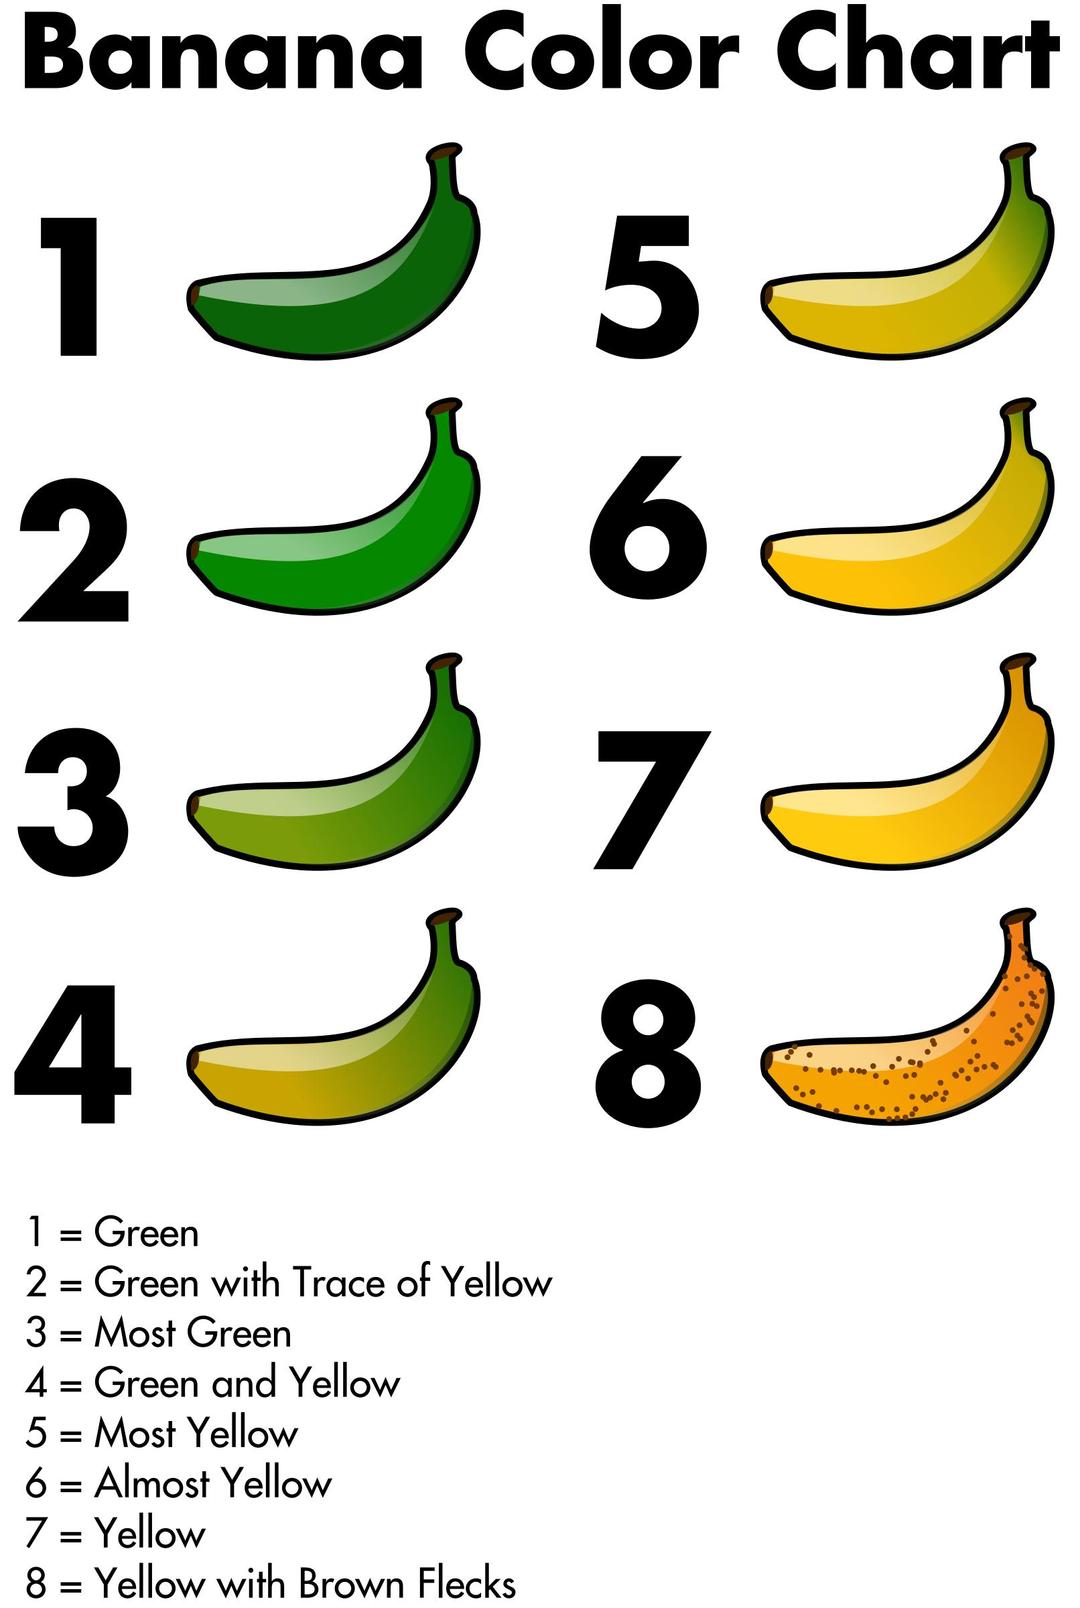 Banana Color Chart png transparent